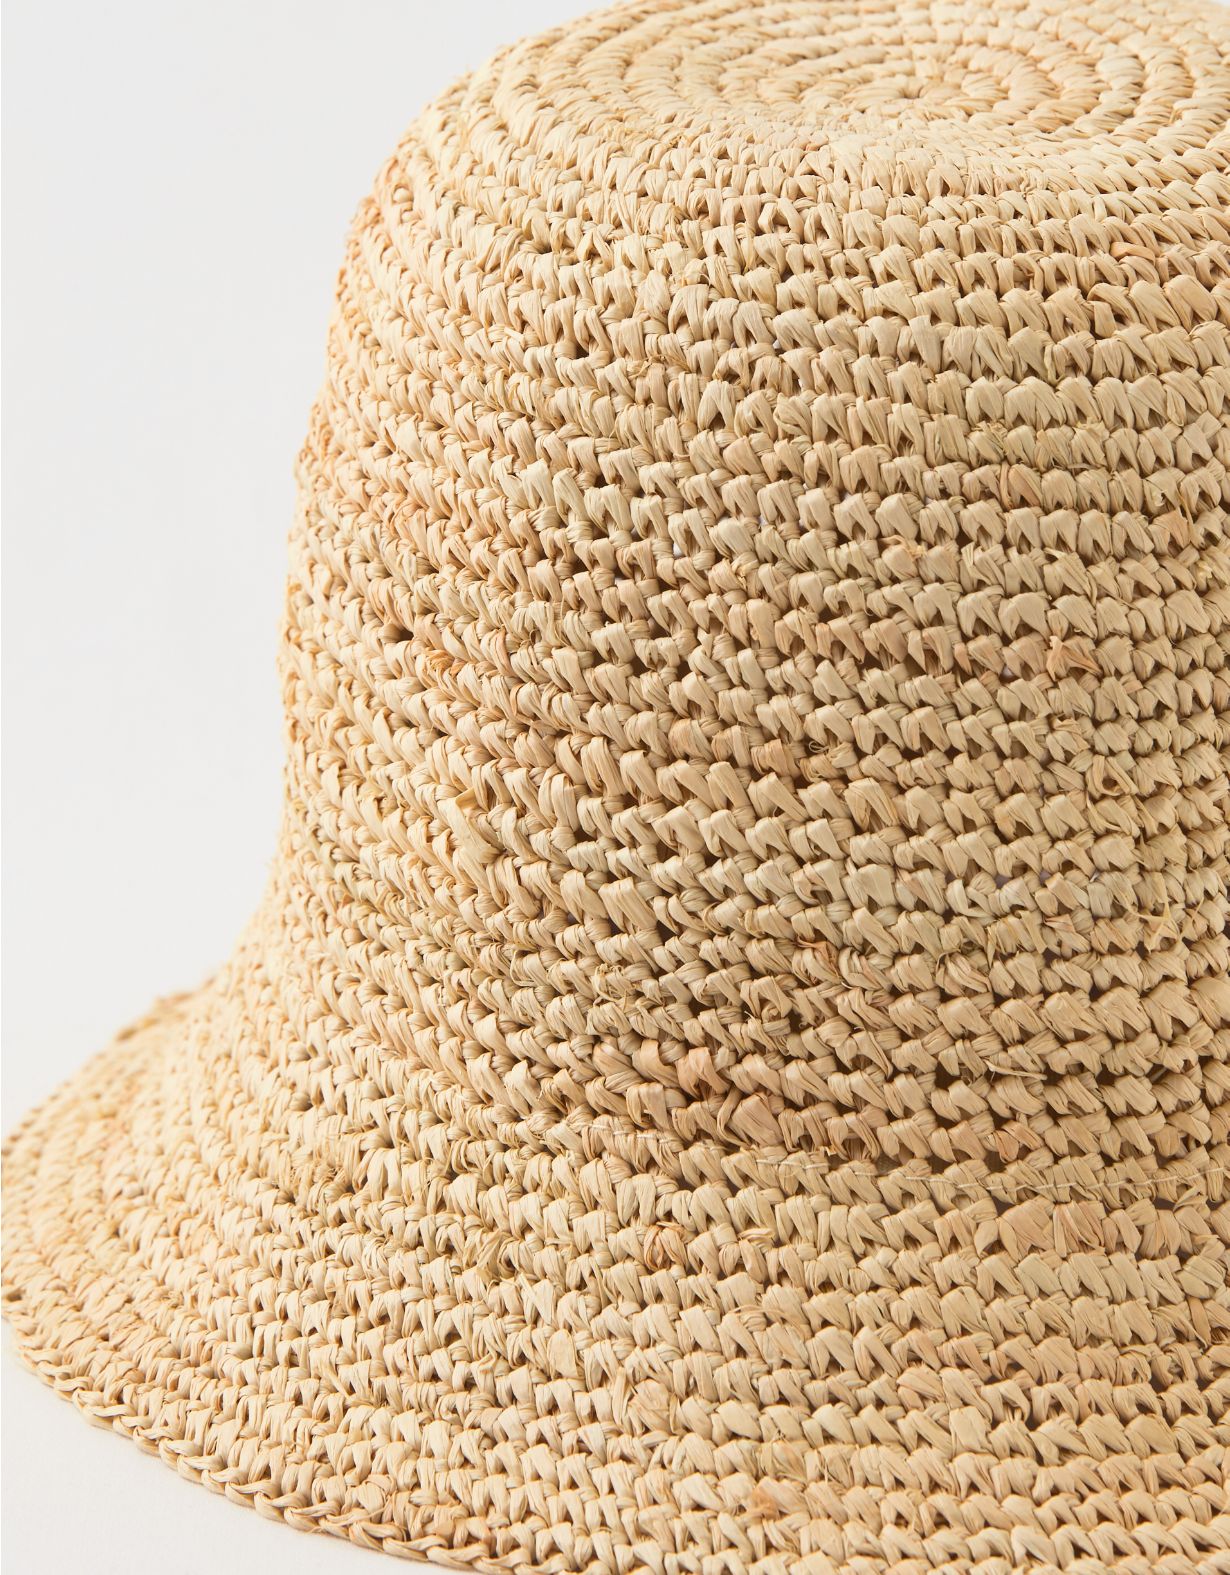 Aerie Straw Crochet Bucket Hat